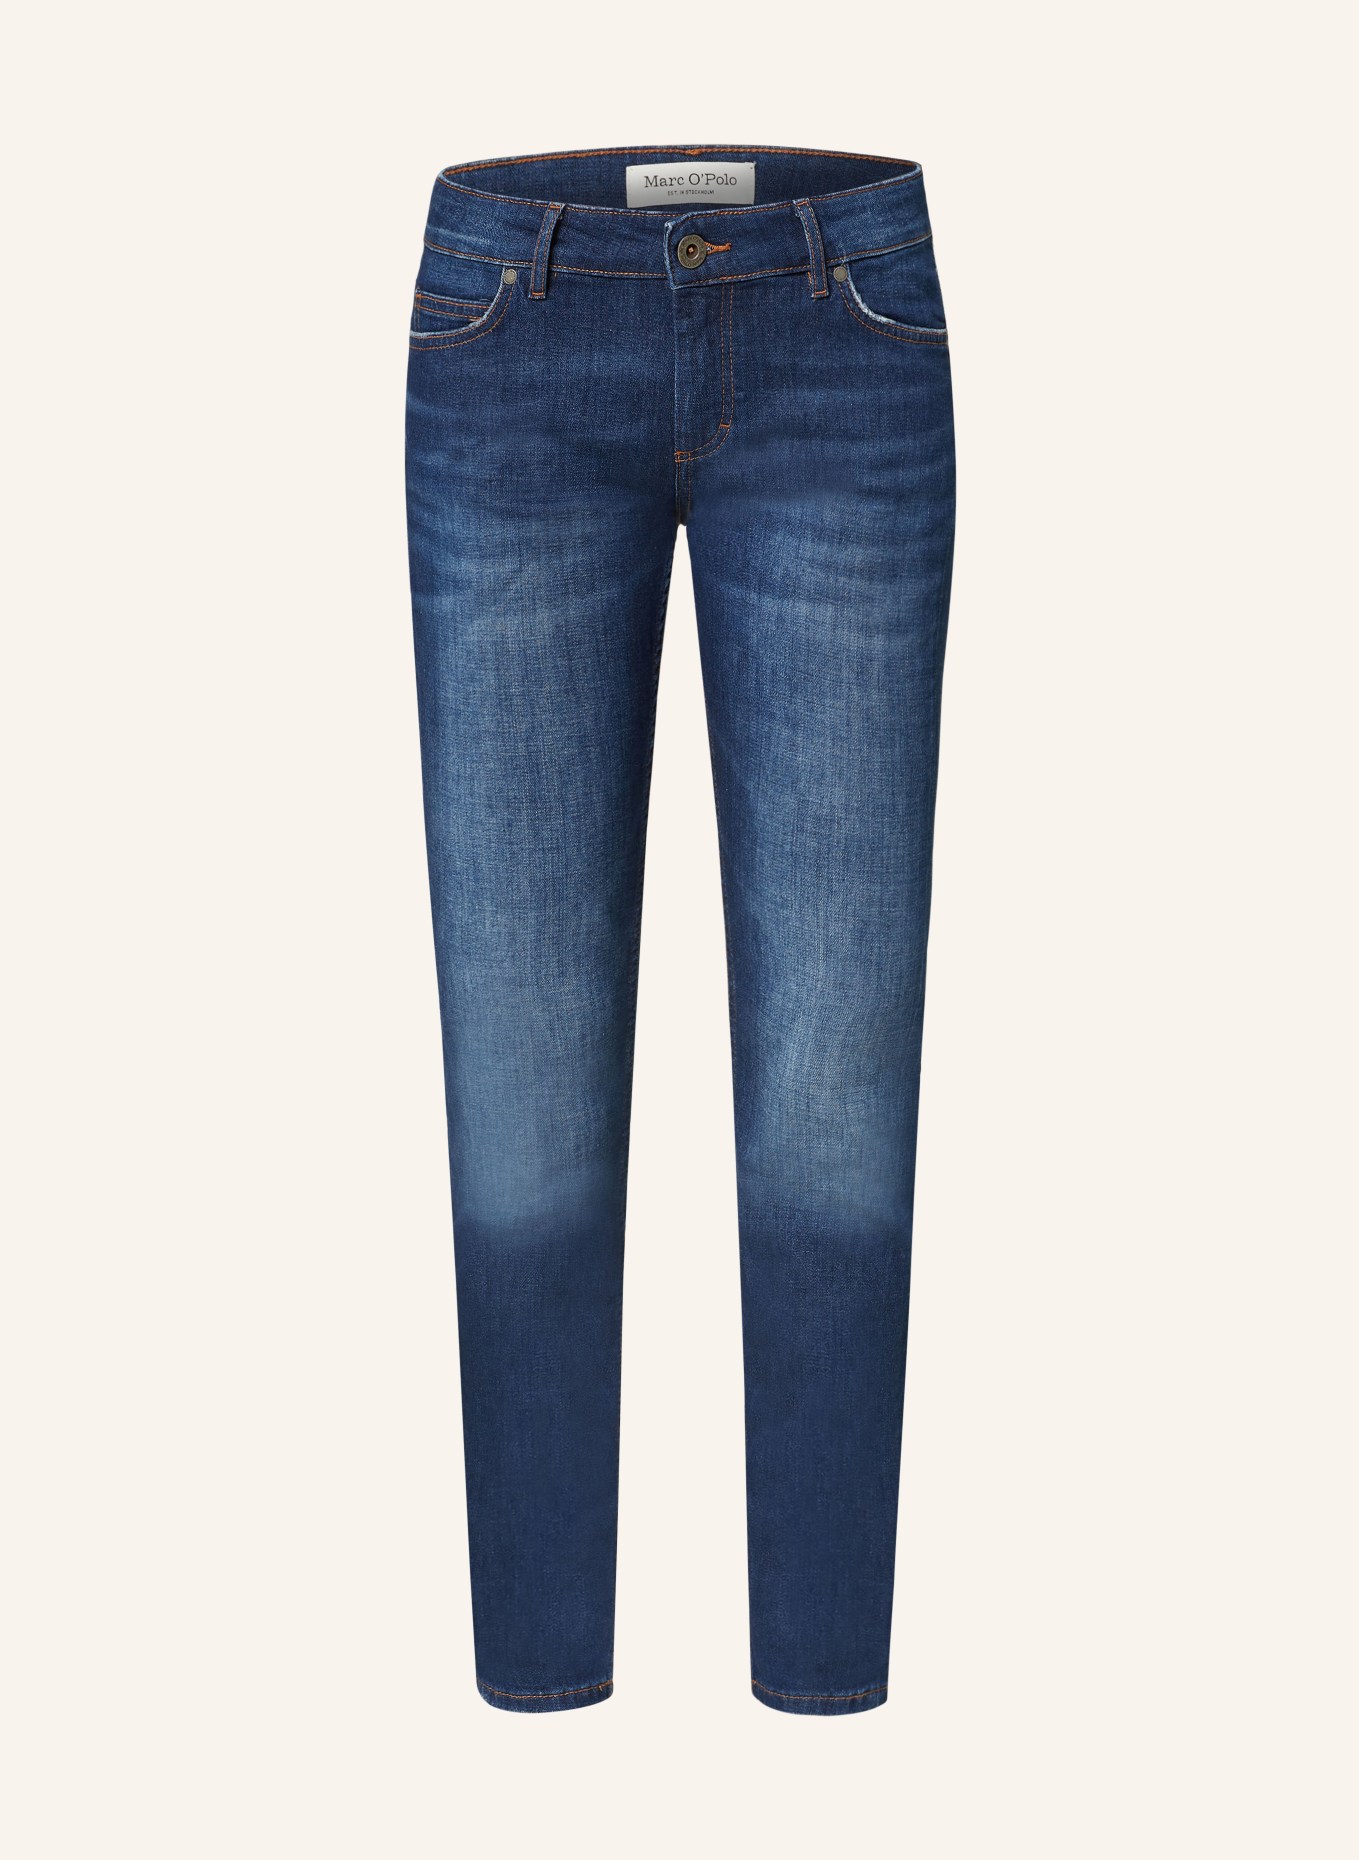 Marc O'Polo Skinny Jeans ALBY, Farbe: 053 Cashmere Dark Blue Wash (Bild 1)